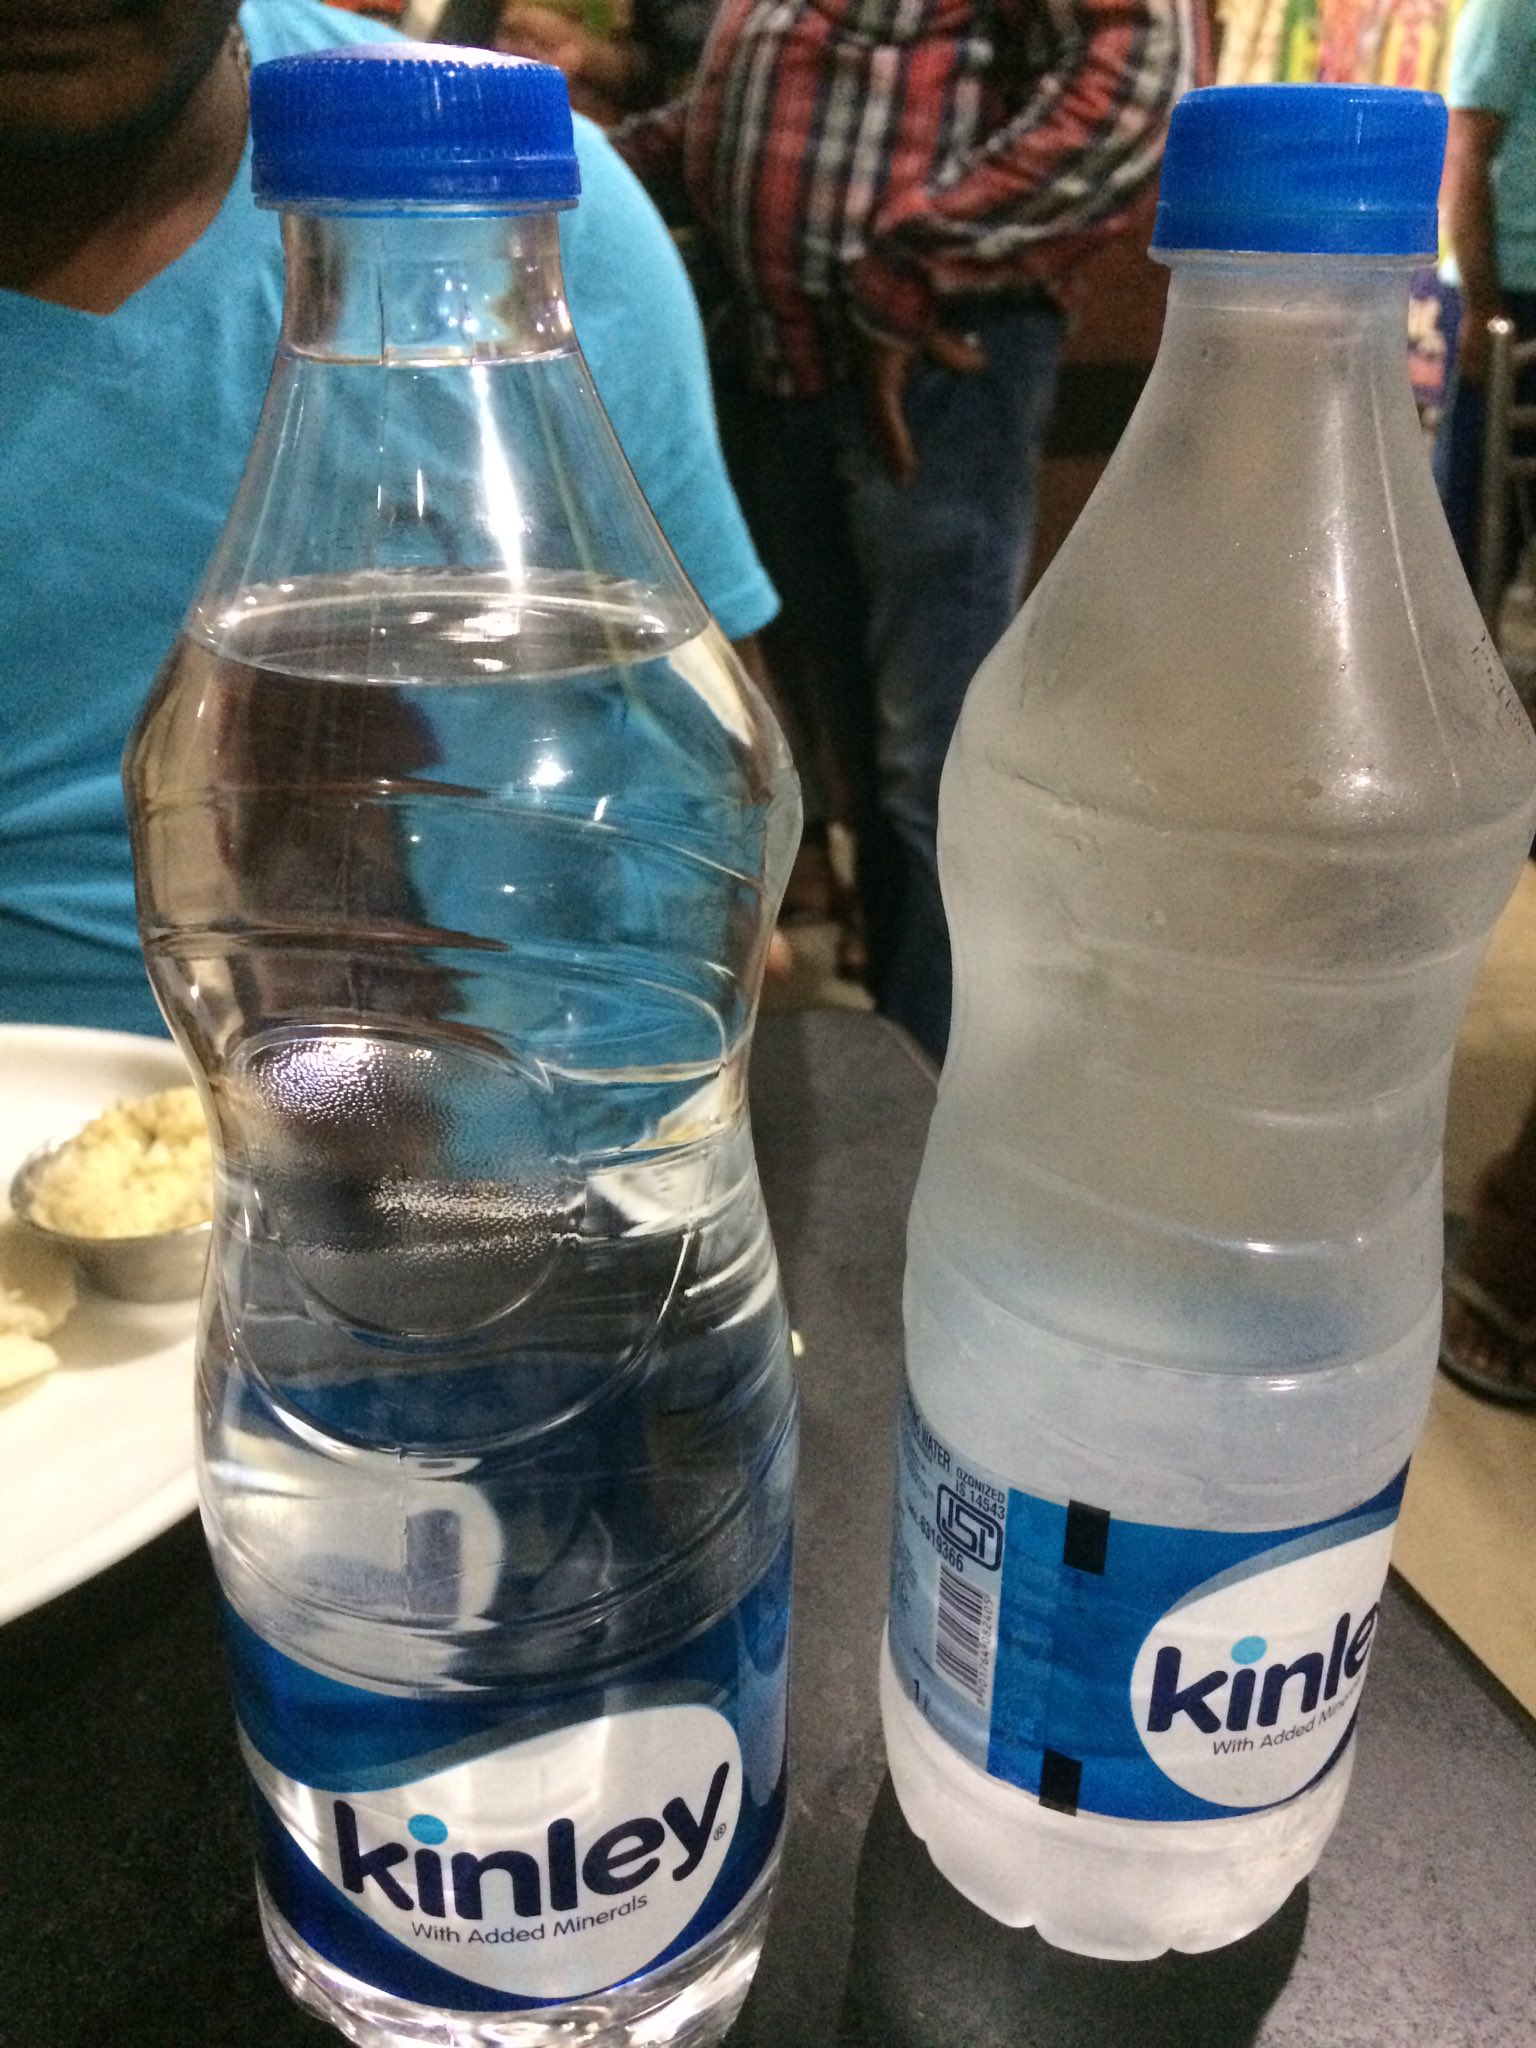 Fake Kinley water bottles on sale!